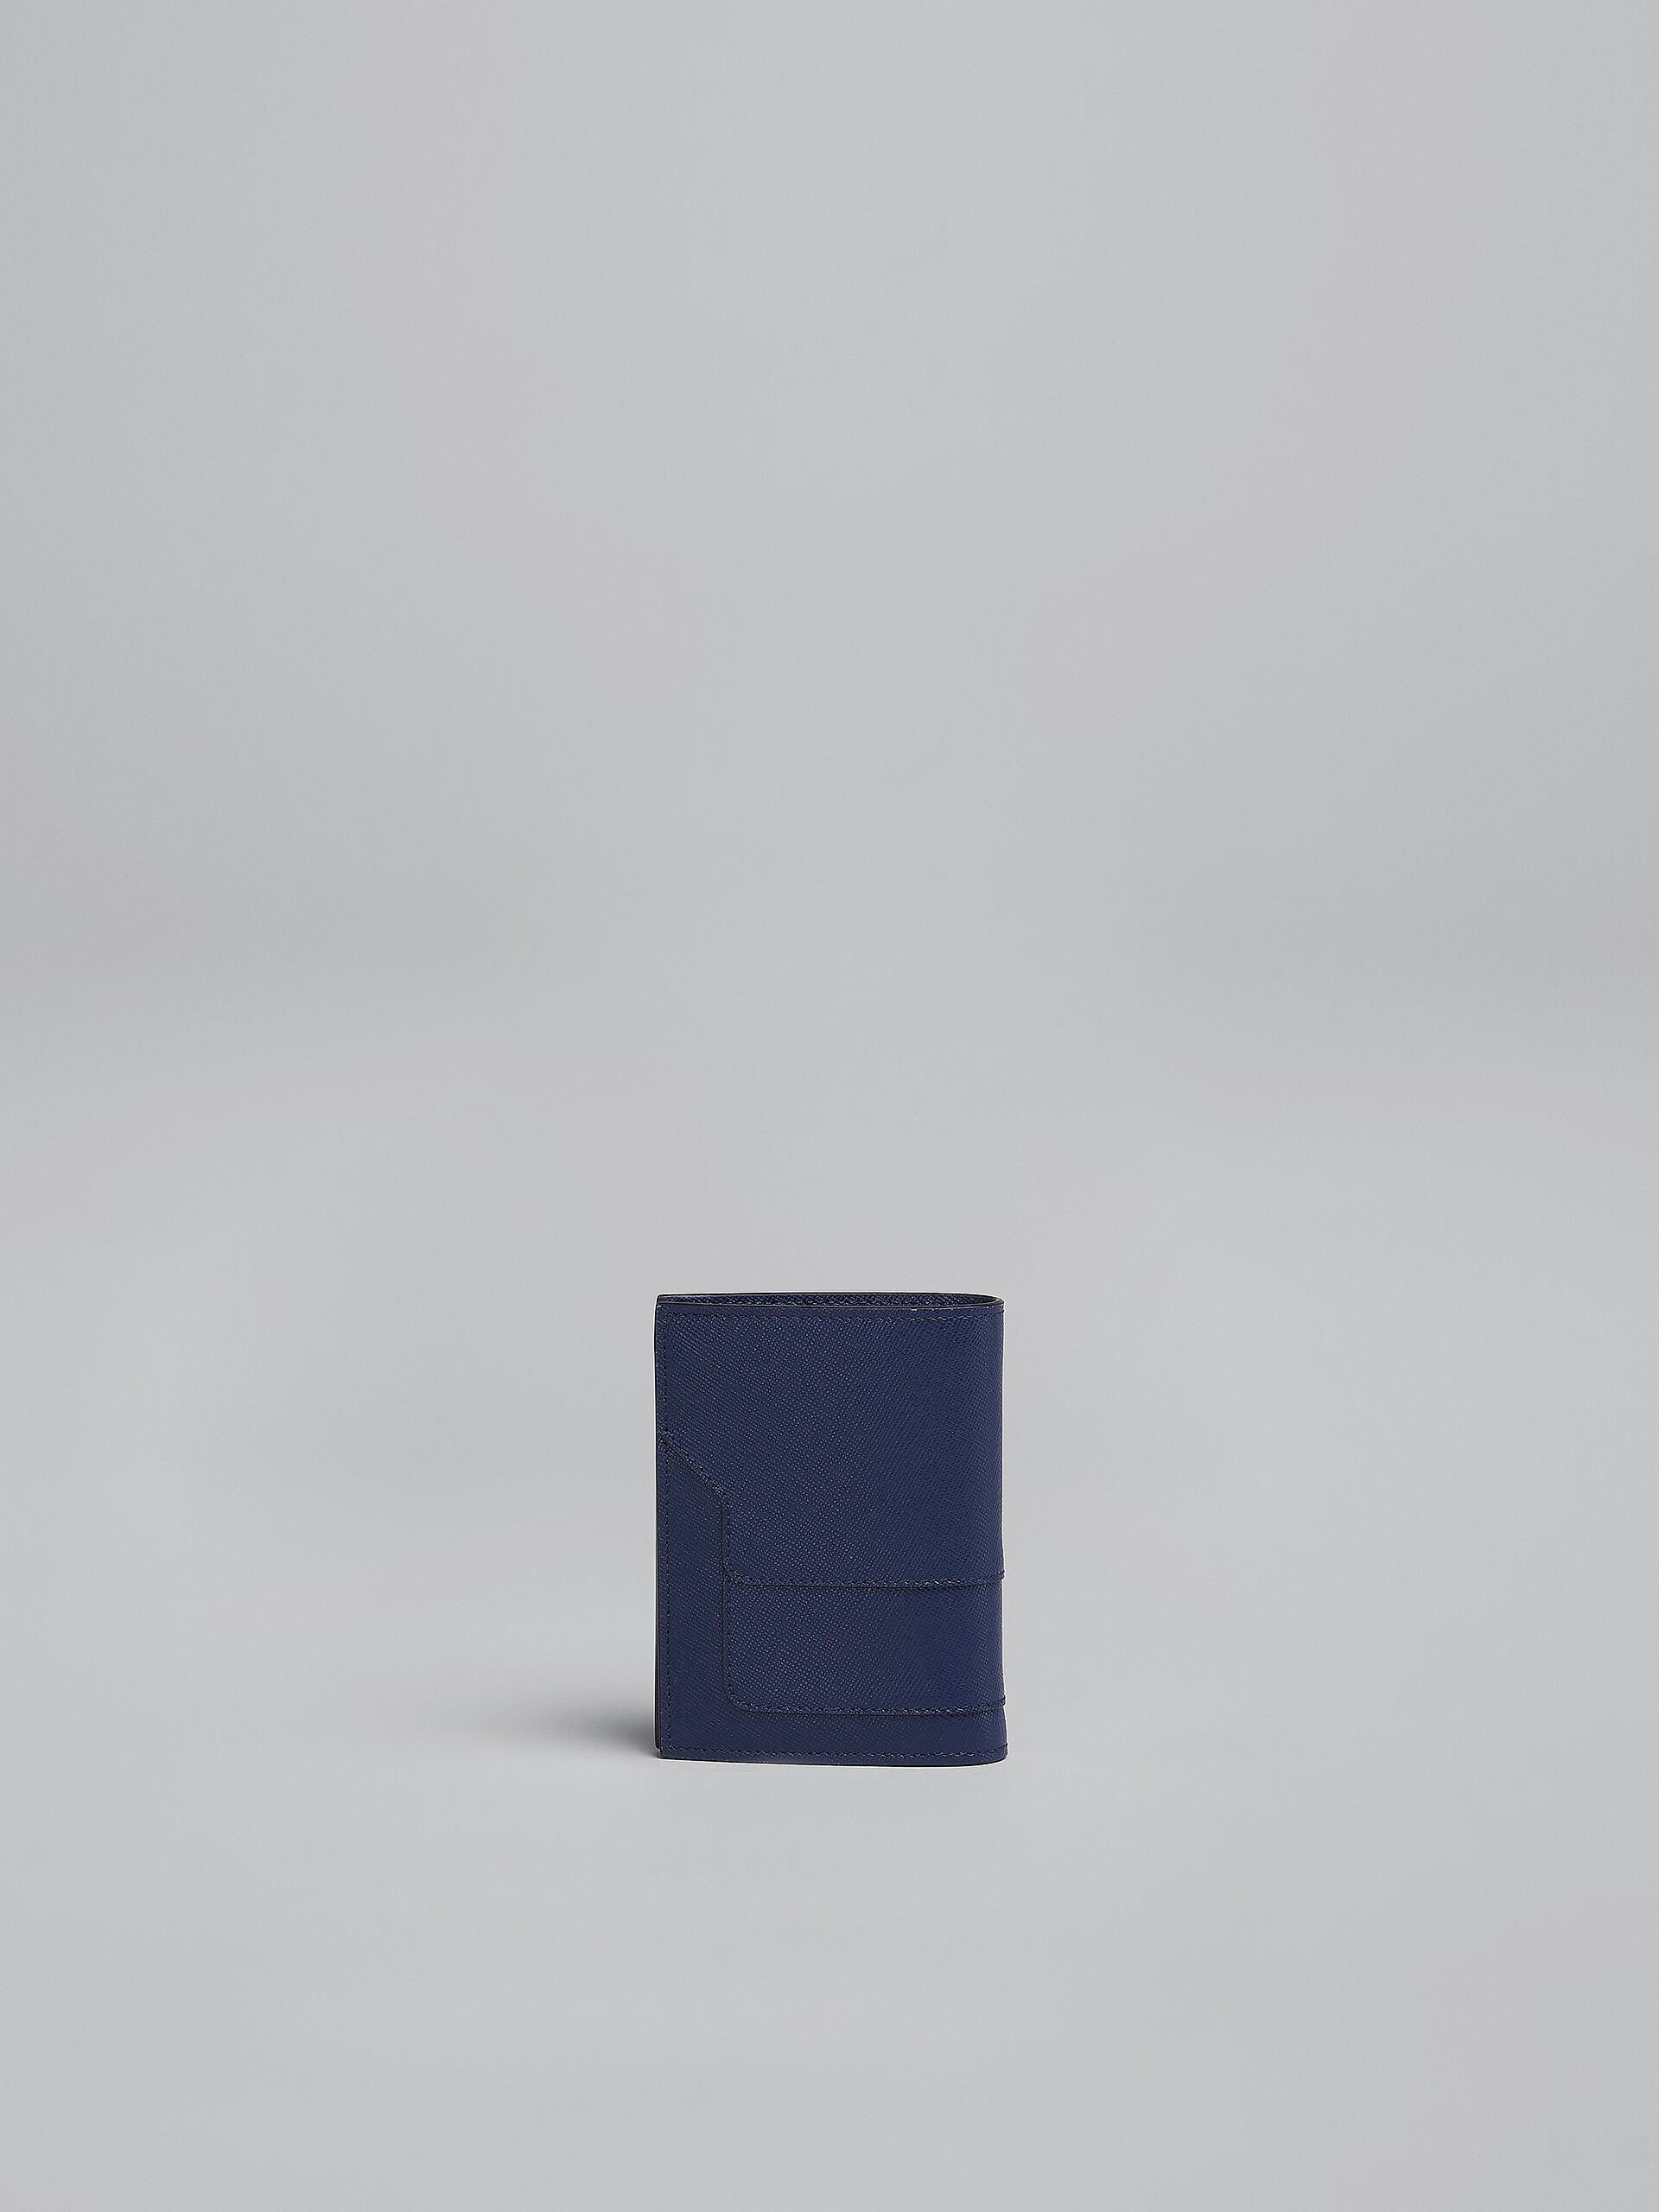 Blue saffiano leather bi-fold wallet - Wallets - Image 3